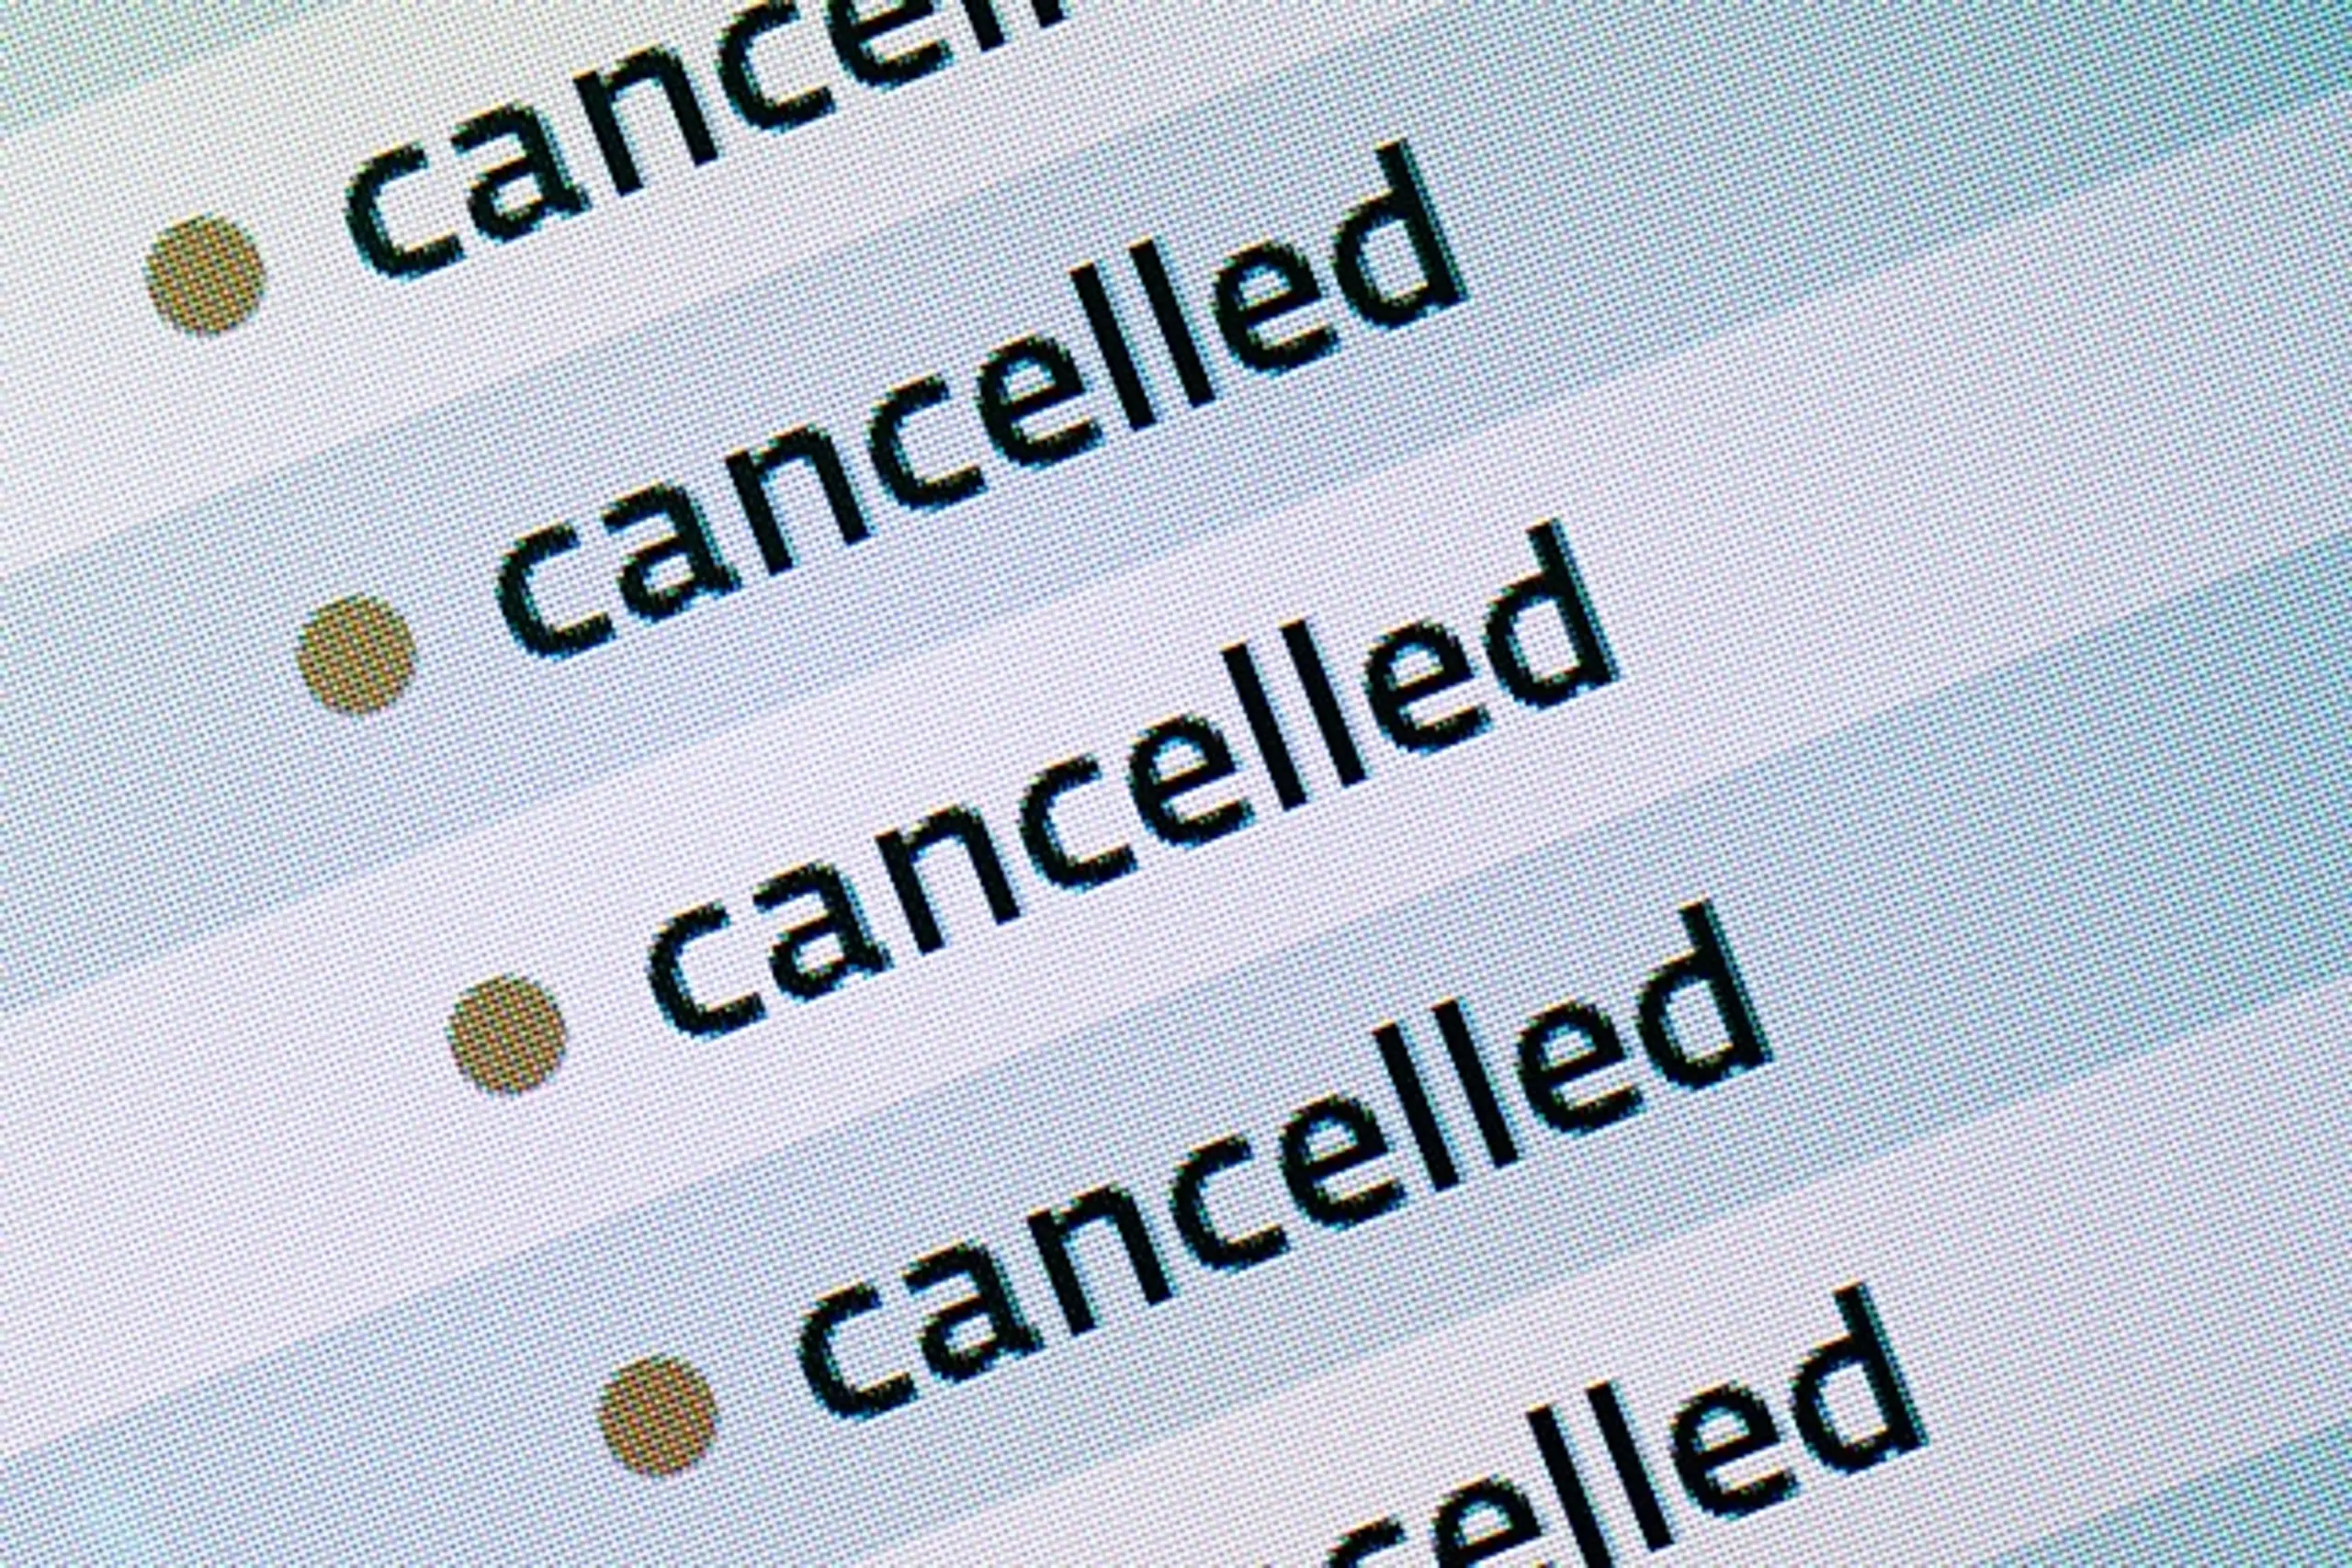 "Cancelled" gilt auch am Karfreitag für viele AUA-Flüge